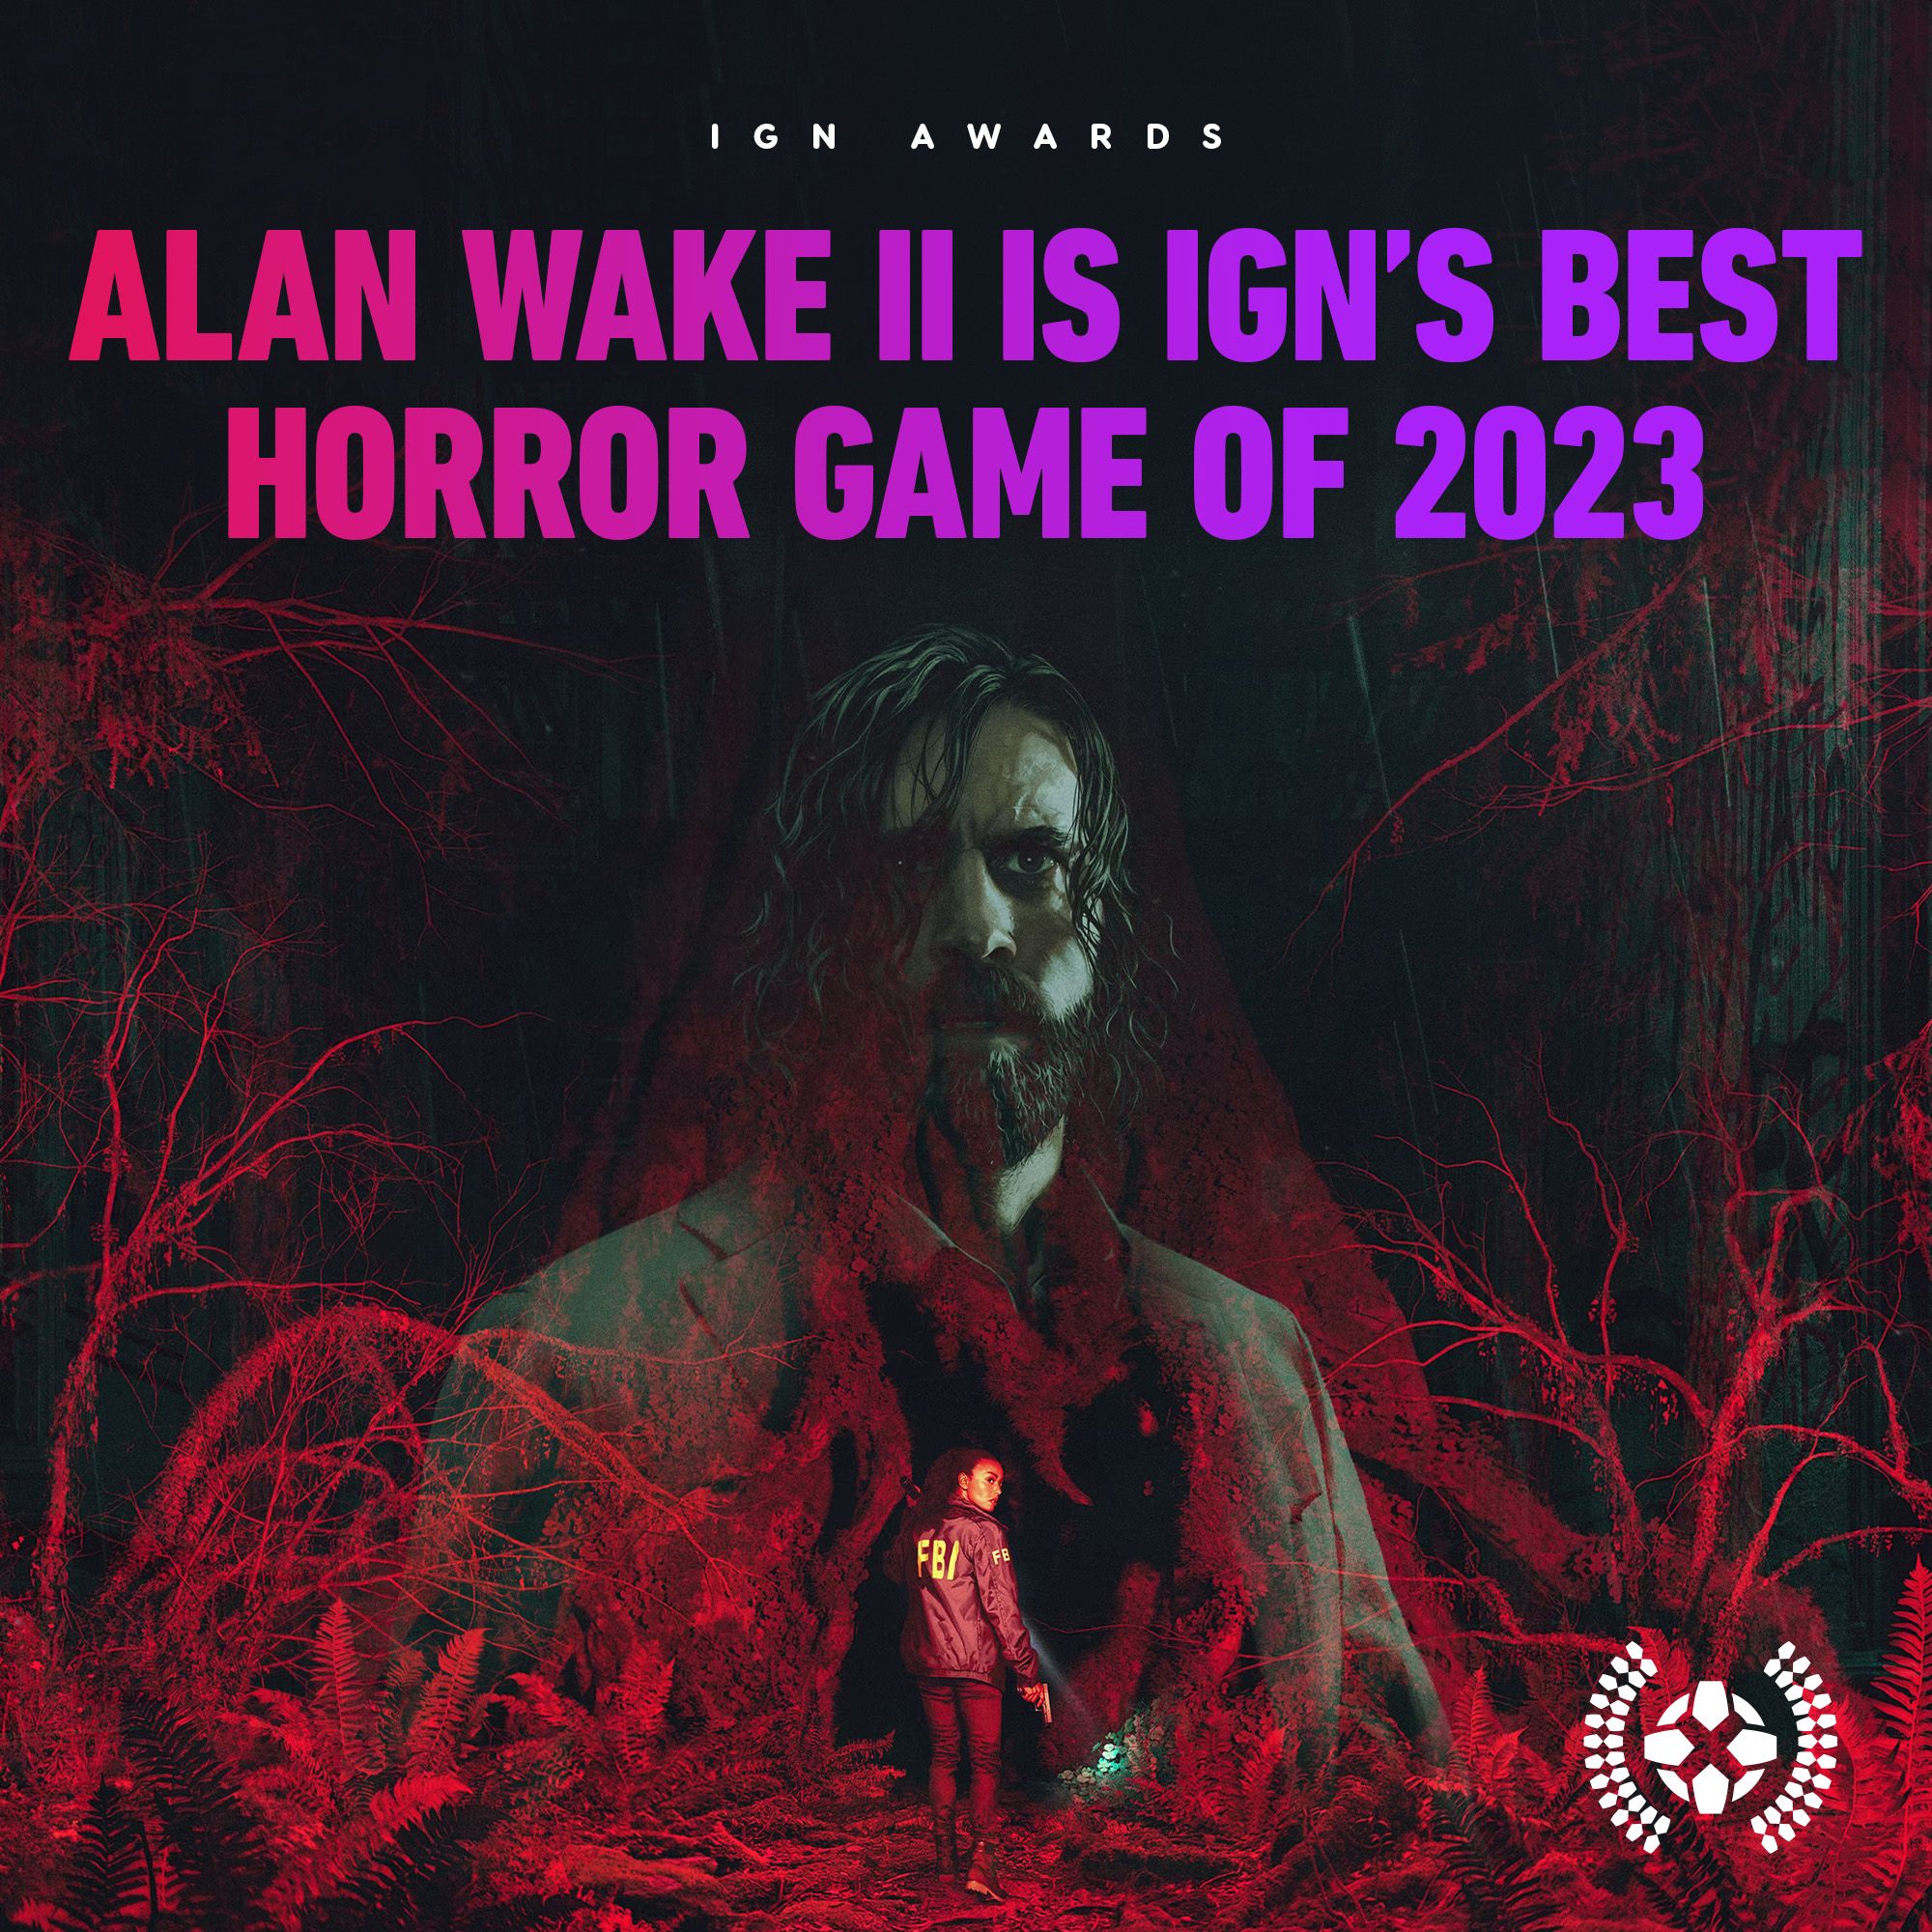 Alan Wake Remastered Ps5 Midia Fisica